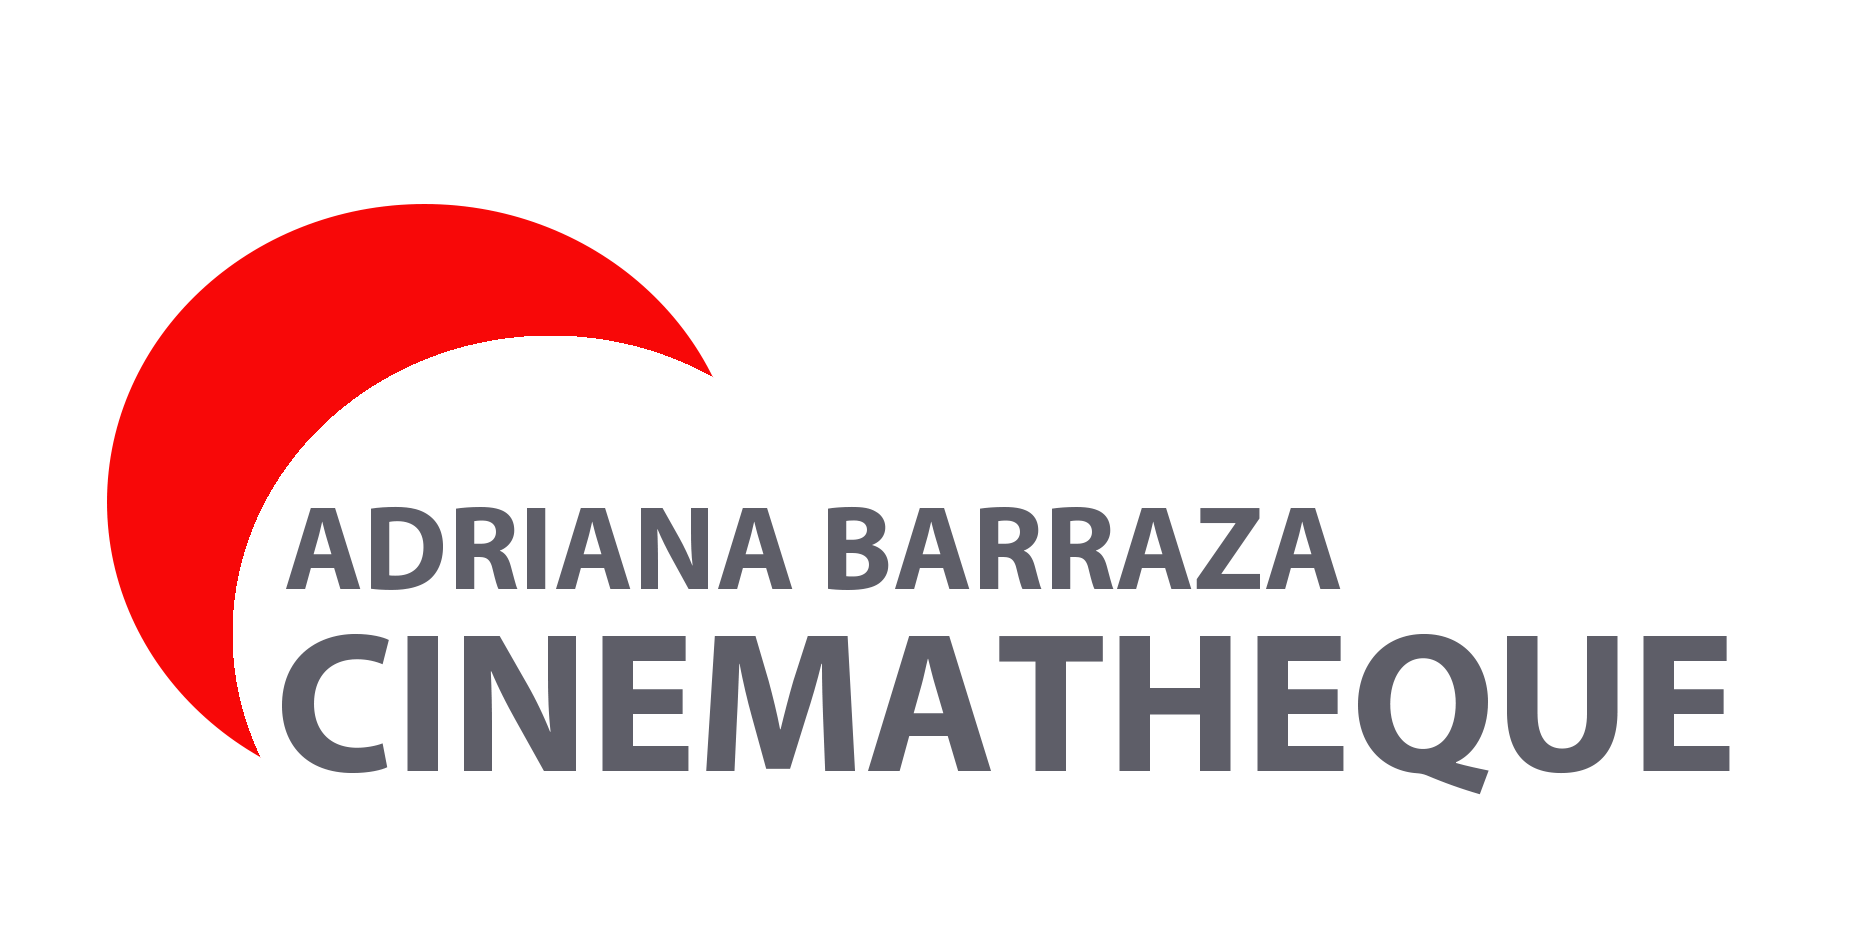 ADRIANA BARRAZA CINEMATHEQUE – LOGO 1